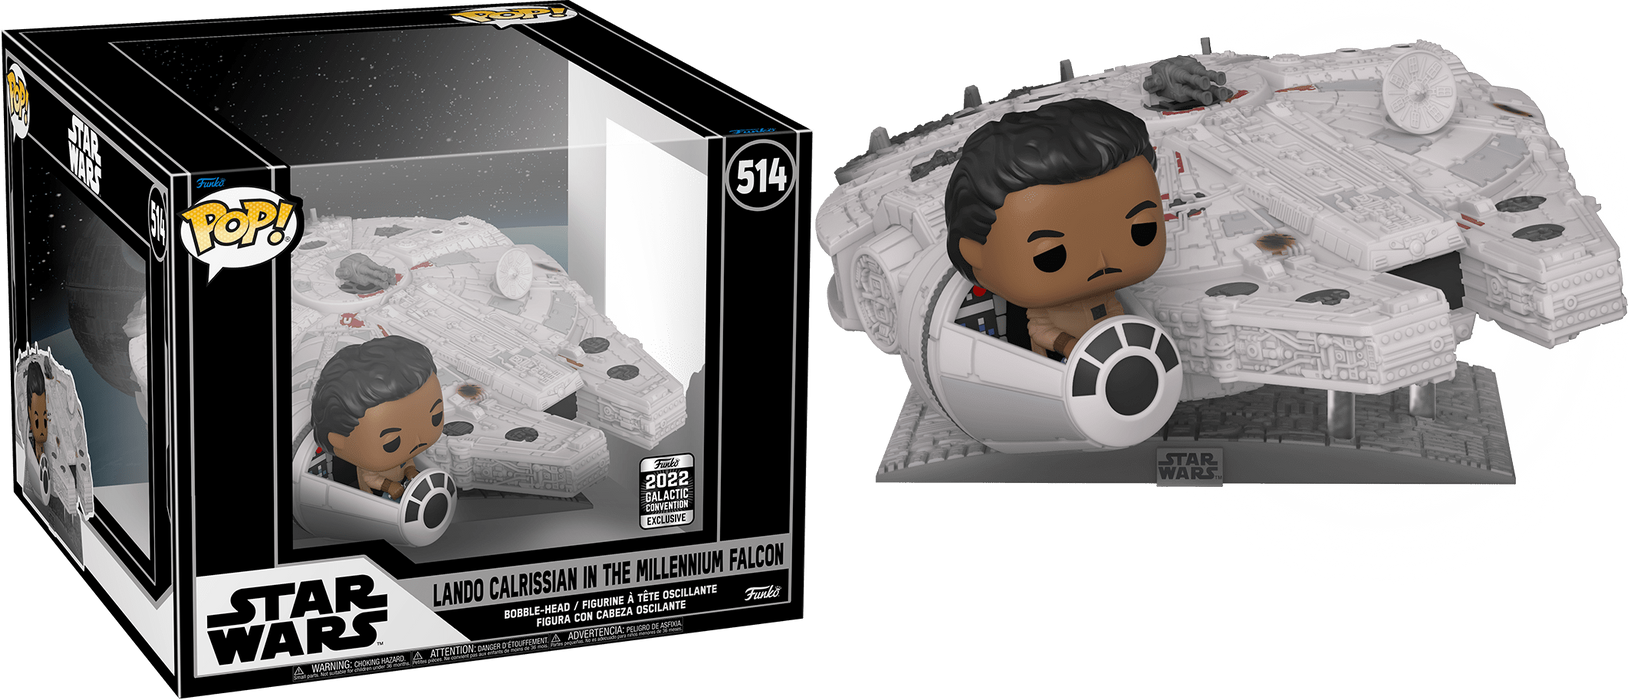 Lando Calrissian in the Millennium Falcon #514 2022 Galactic Convention Exclusive Funko Pop! Star wars